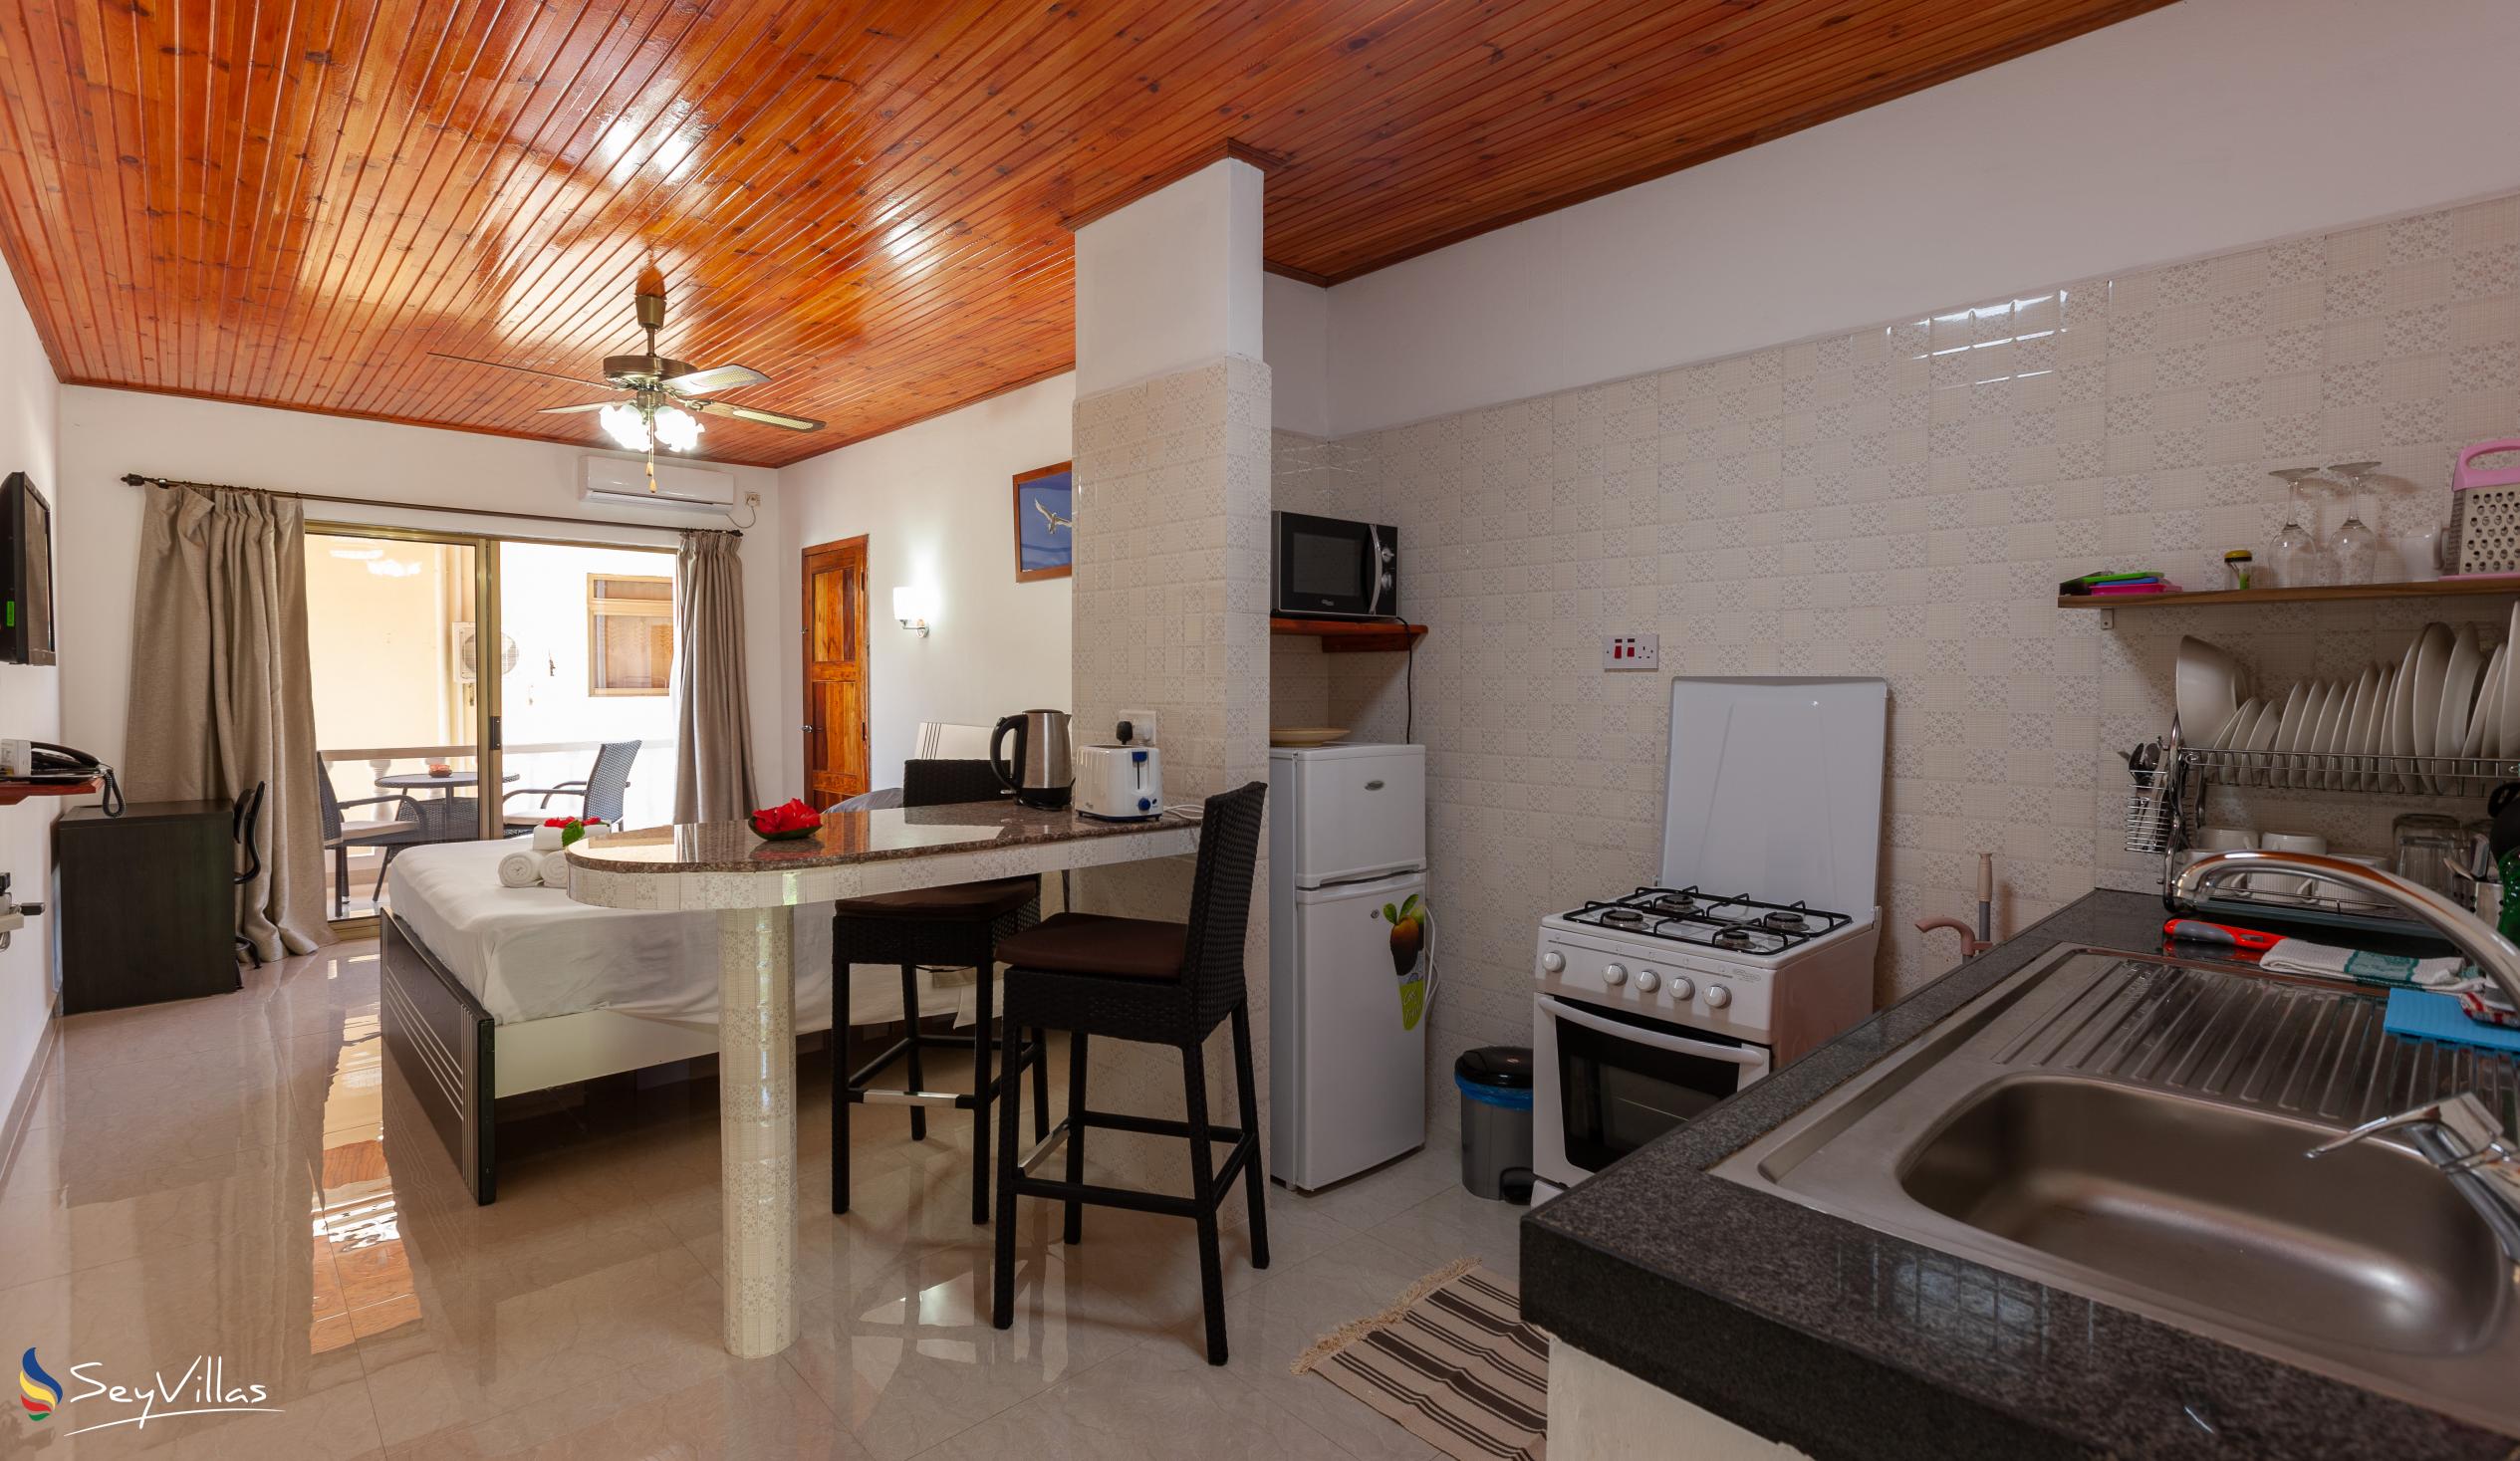 Foto 53: Tourterelle Holiday Home - Studio Standard - Praslin (Seychelles)